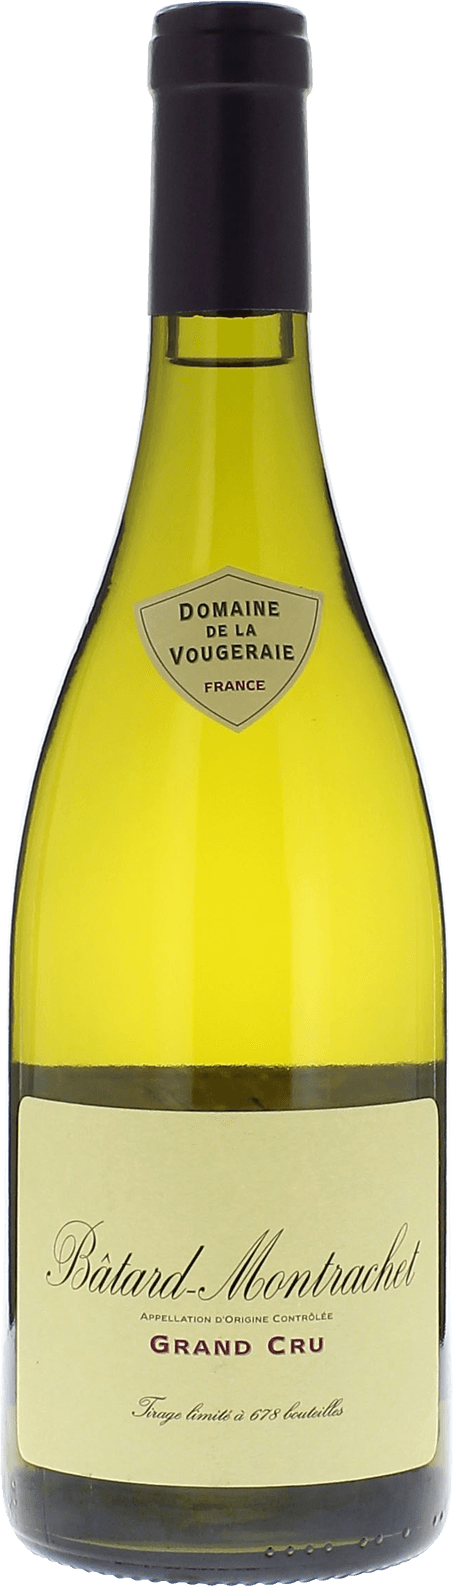 Batard montrachet grand cru 2018 Domaine VOUGERAIE, Bourgogne blanc